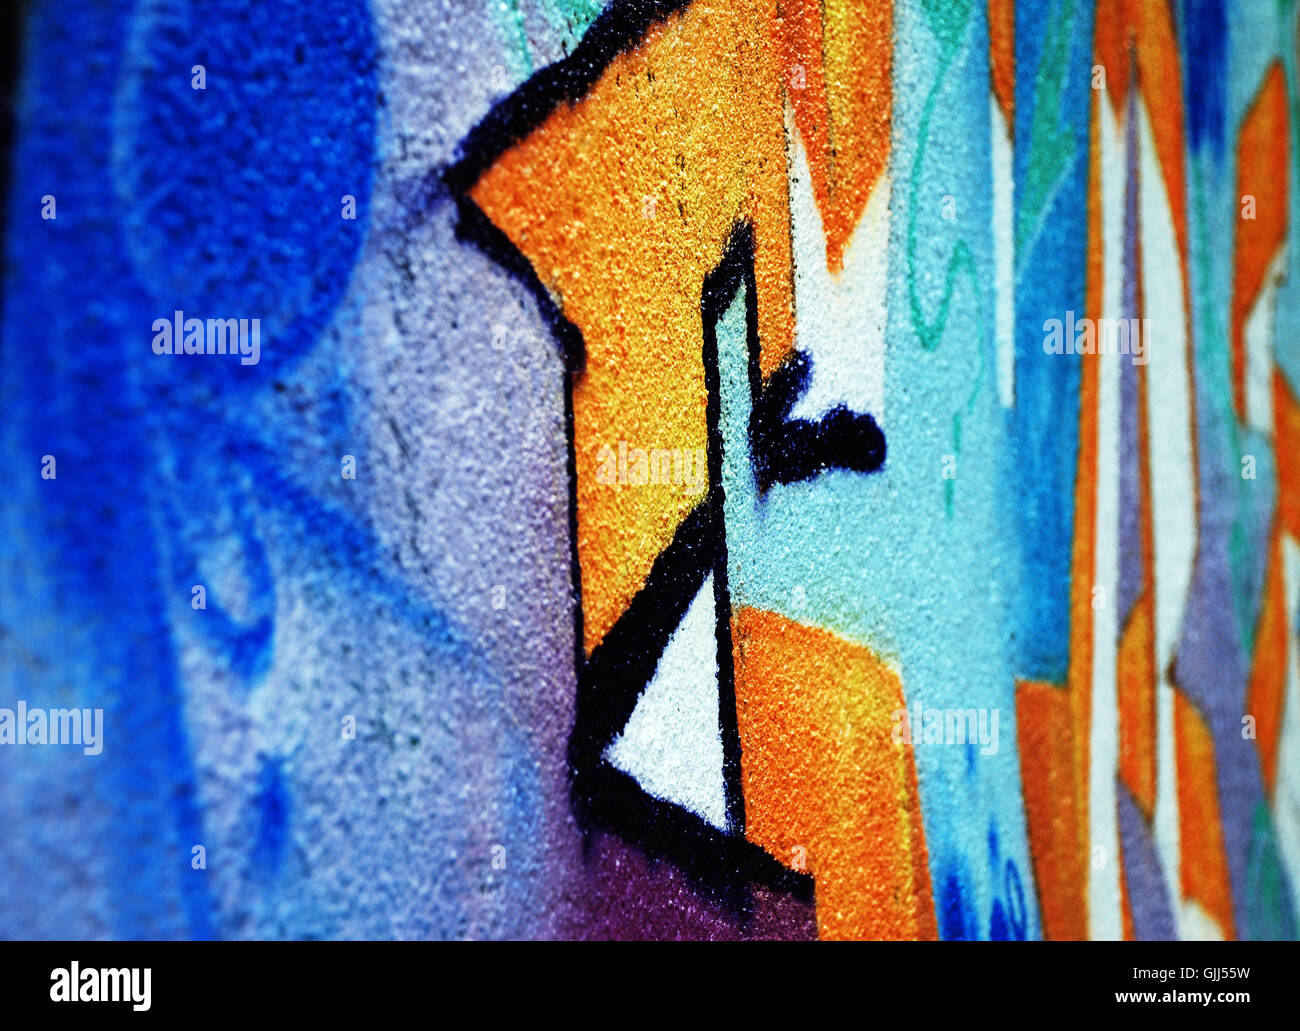 Daub arte graffiti Foto de stock